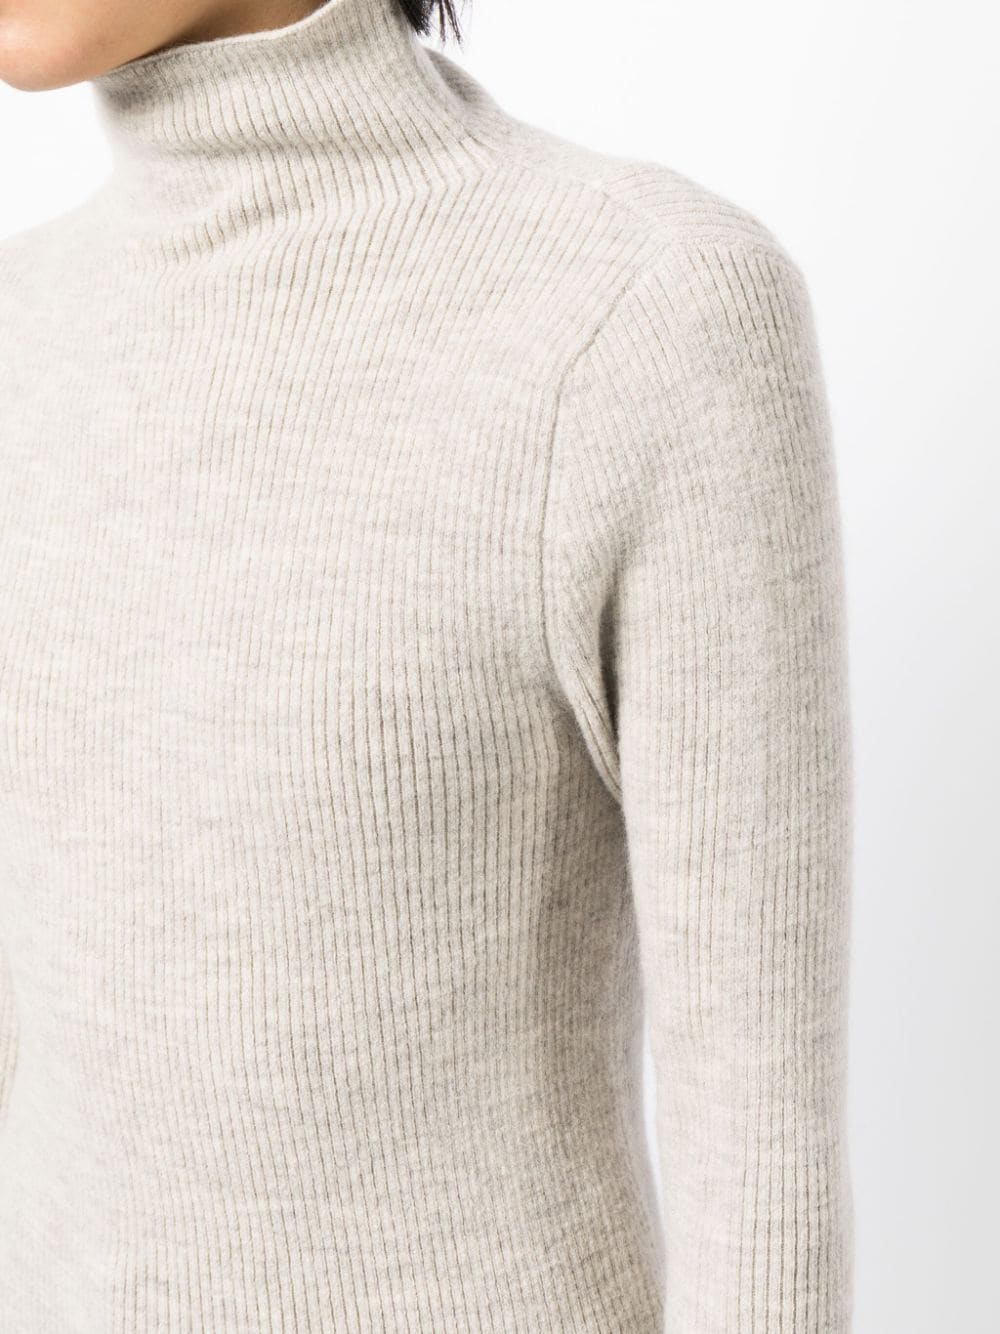 Lauren Manoogian Soft Rollneck Sweater in Glaze White